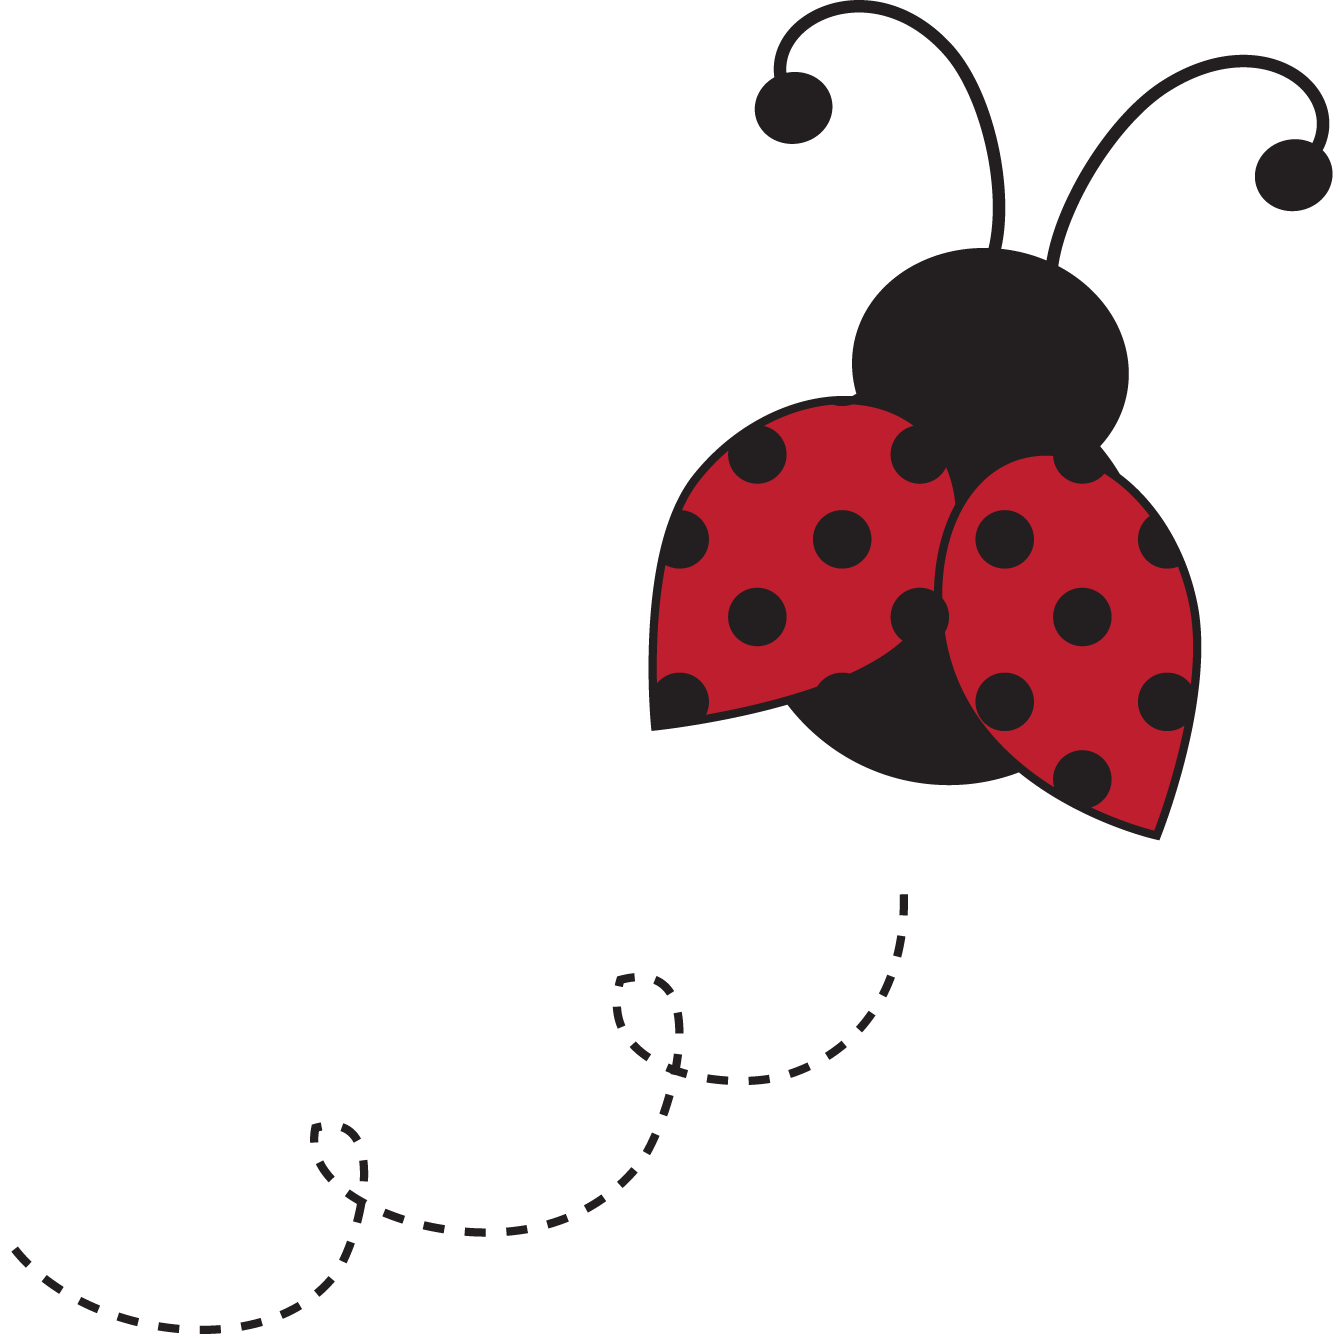 free vector ladybug clipart - photo #32